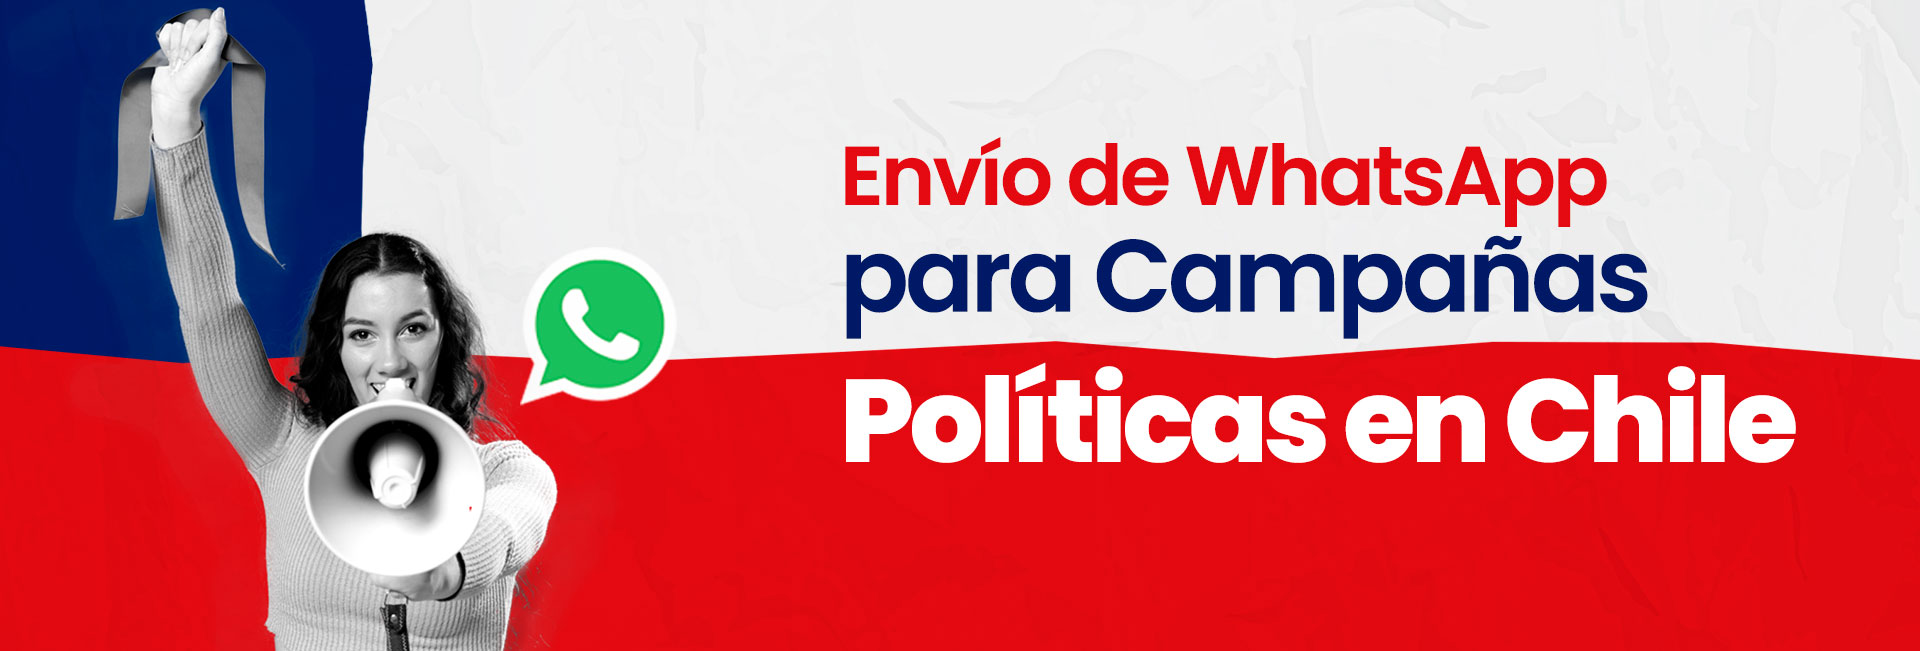 WhatsApp para Campañas políticas en Chile - MASIVOS